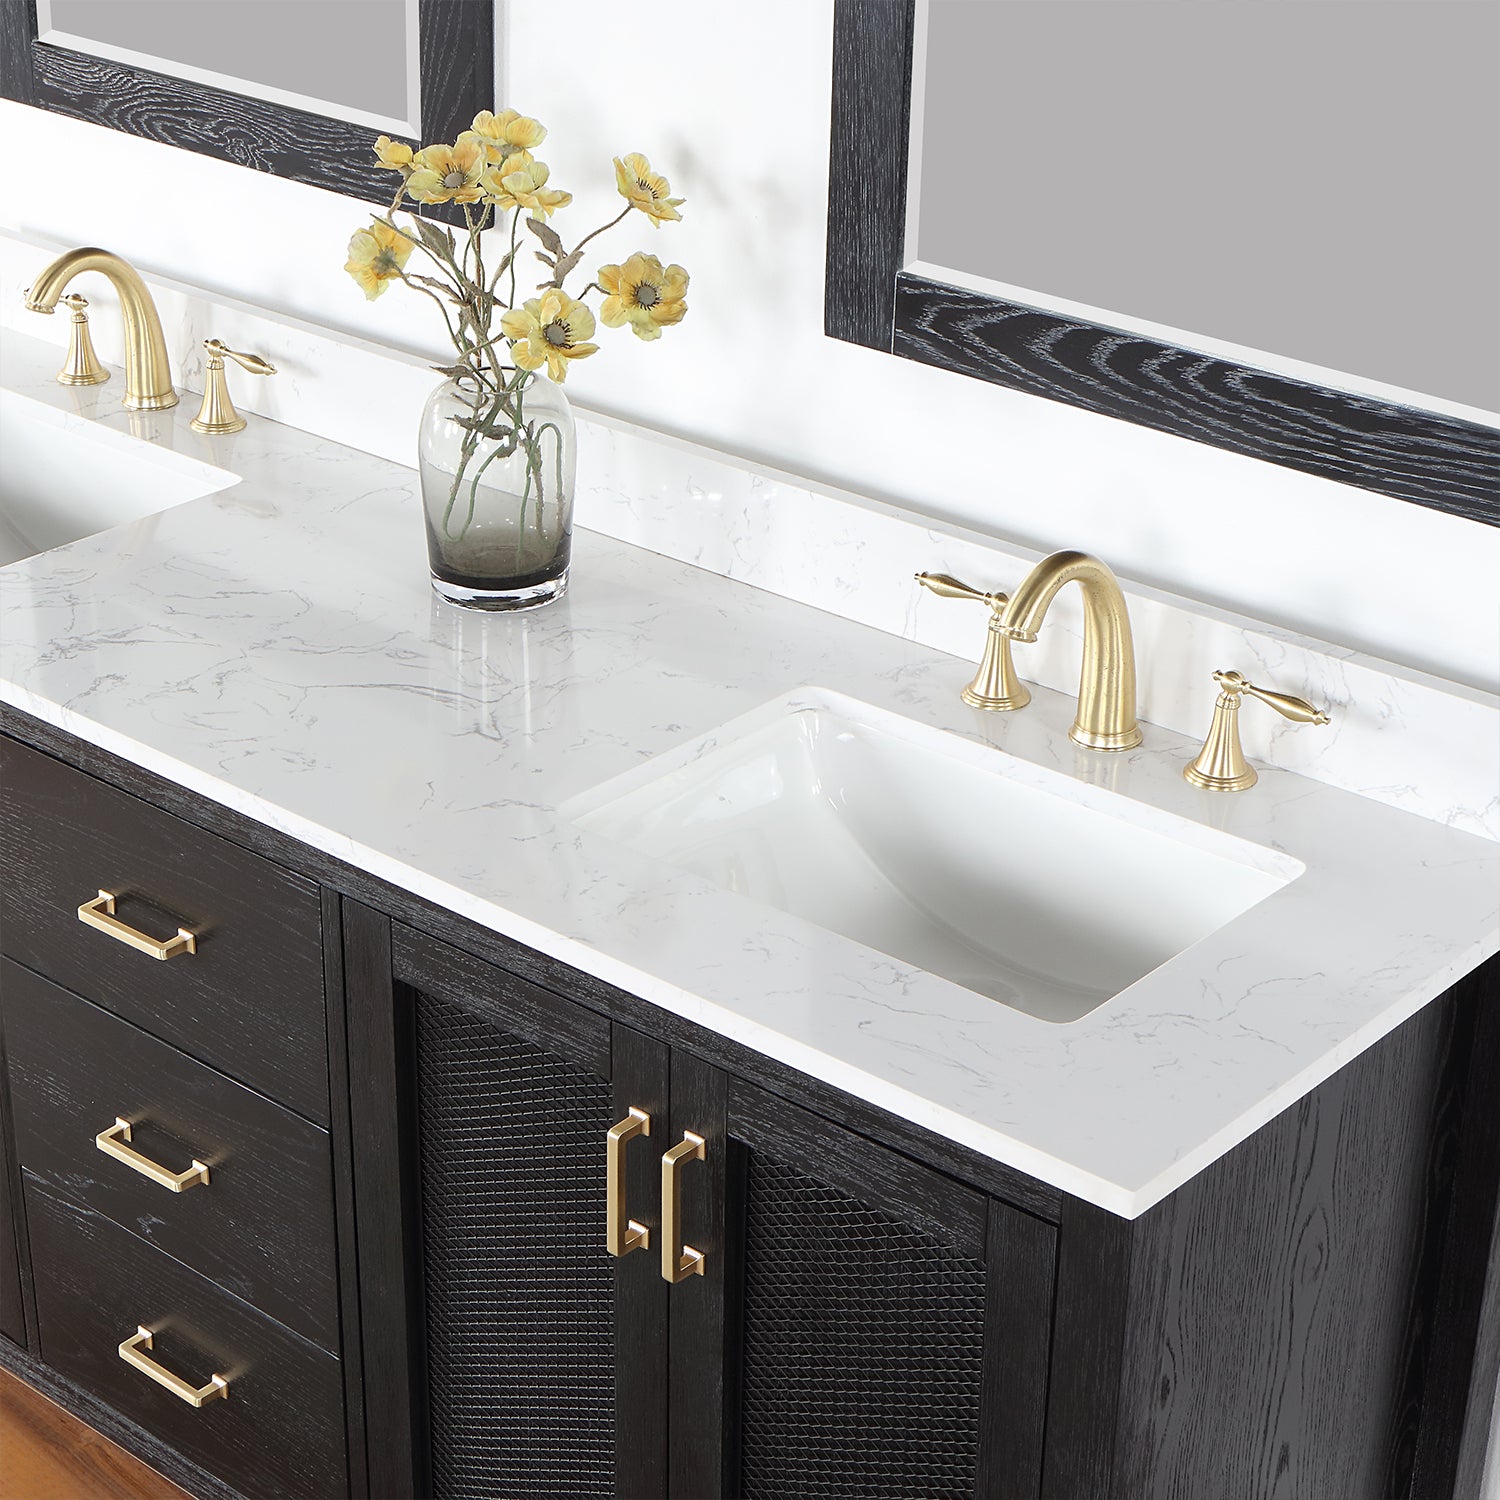 Hadiya 72" Double Bathroom Vanity Set with Aosta White Composite Stone Countertop